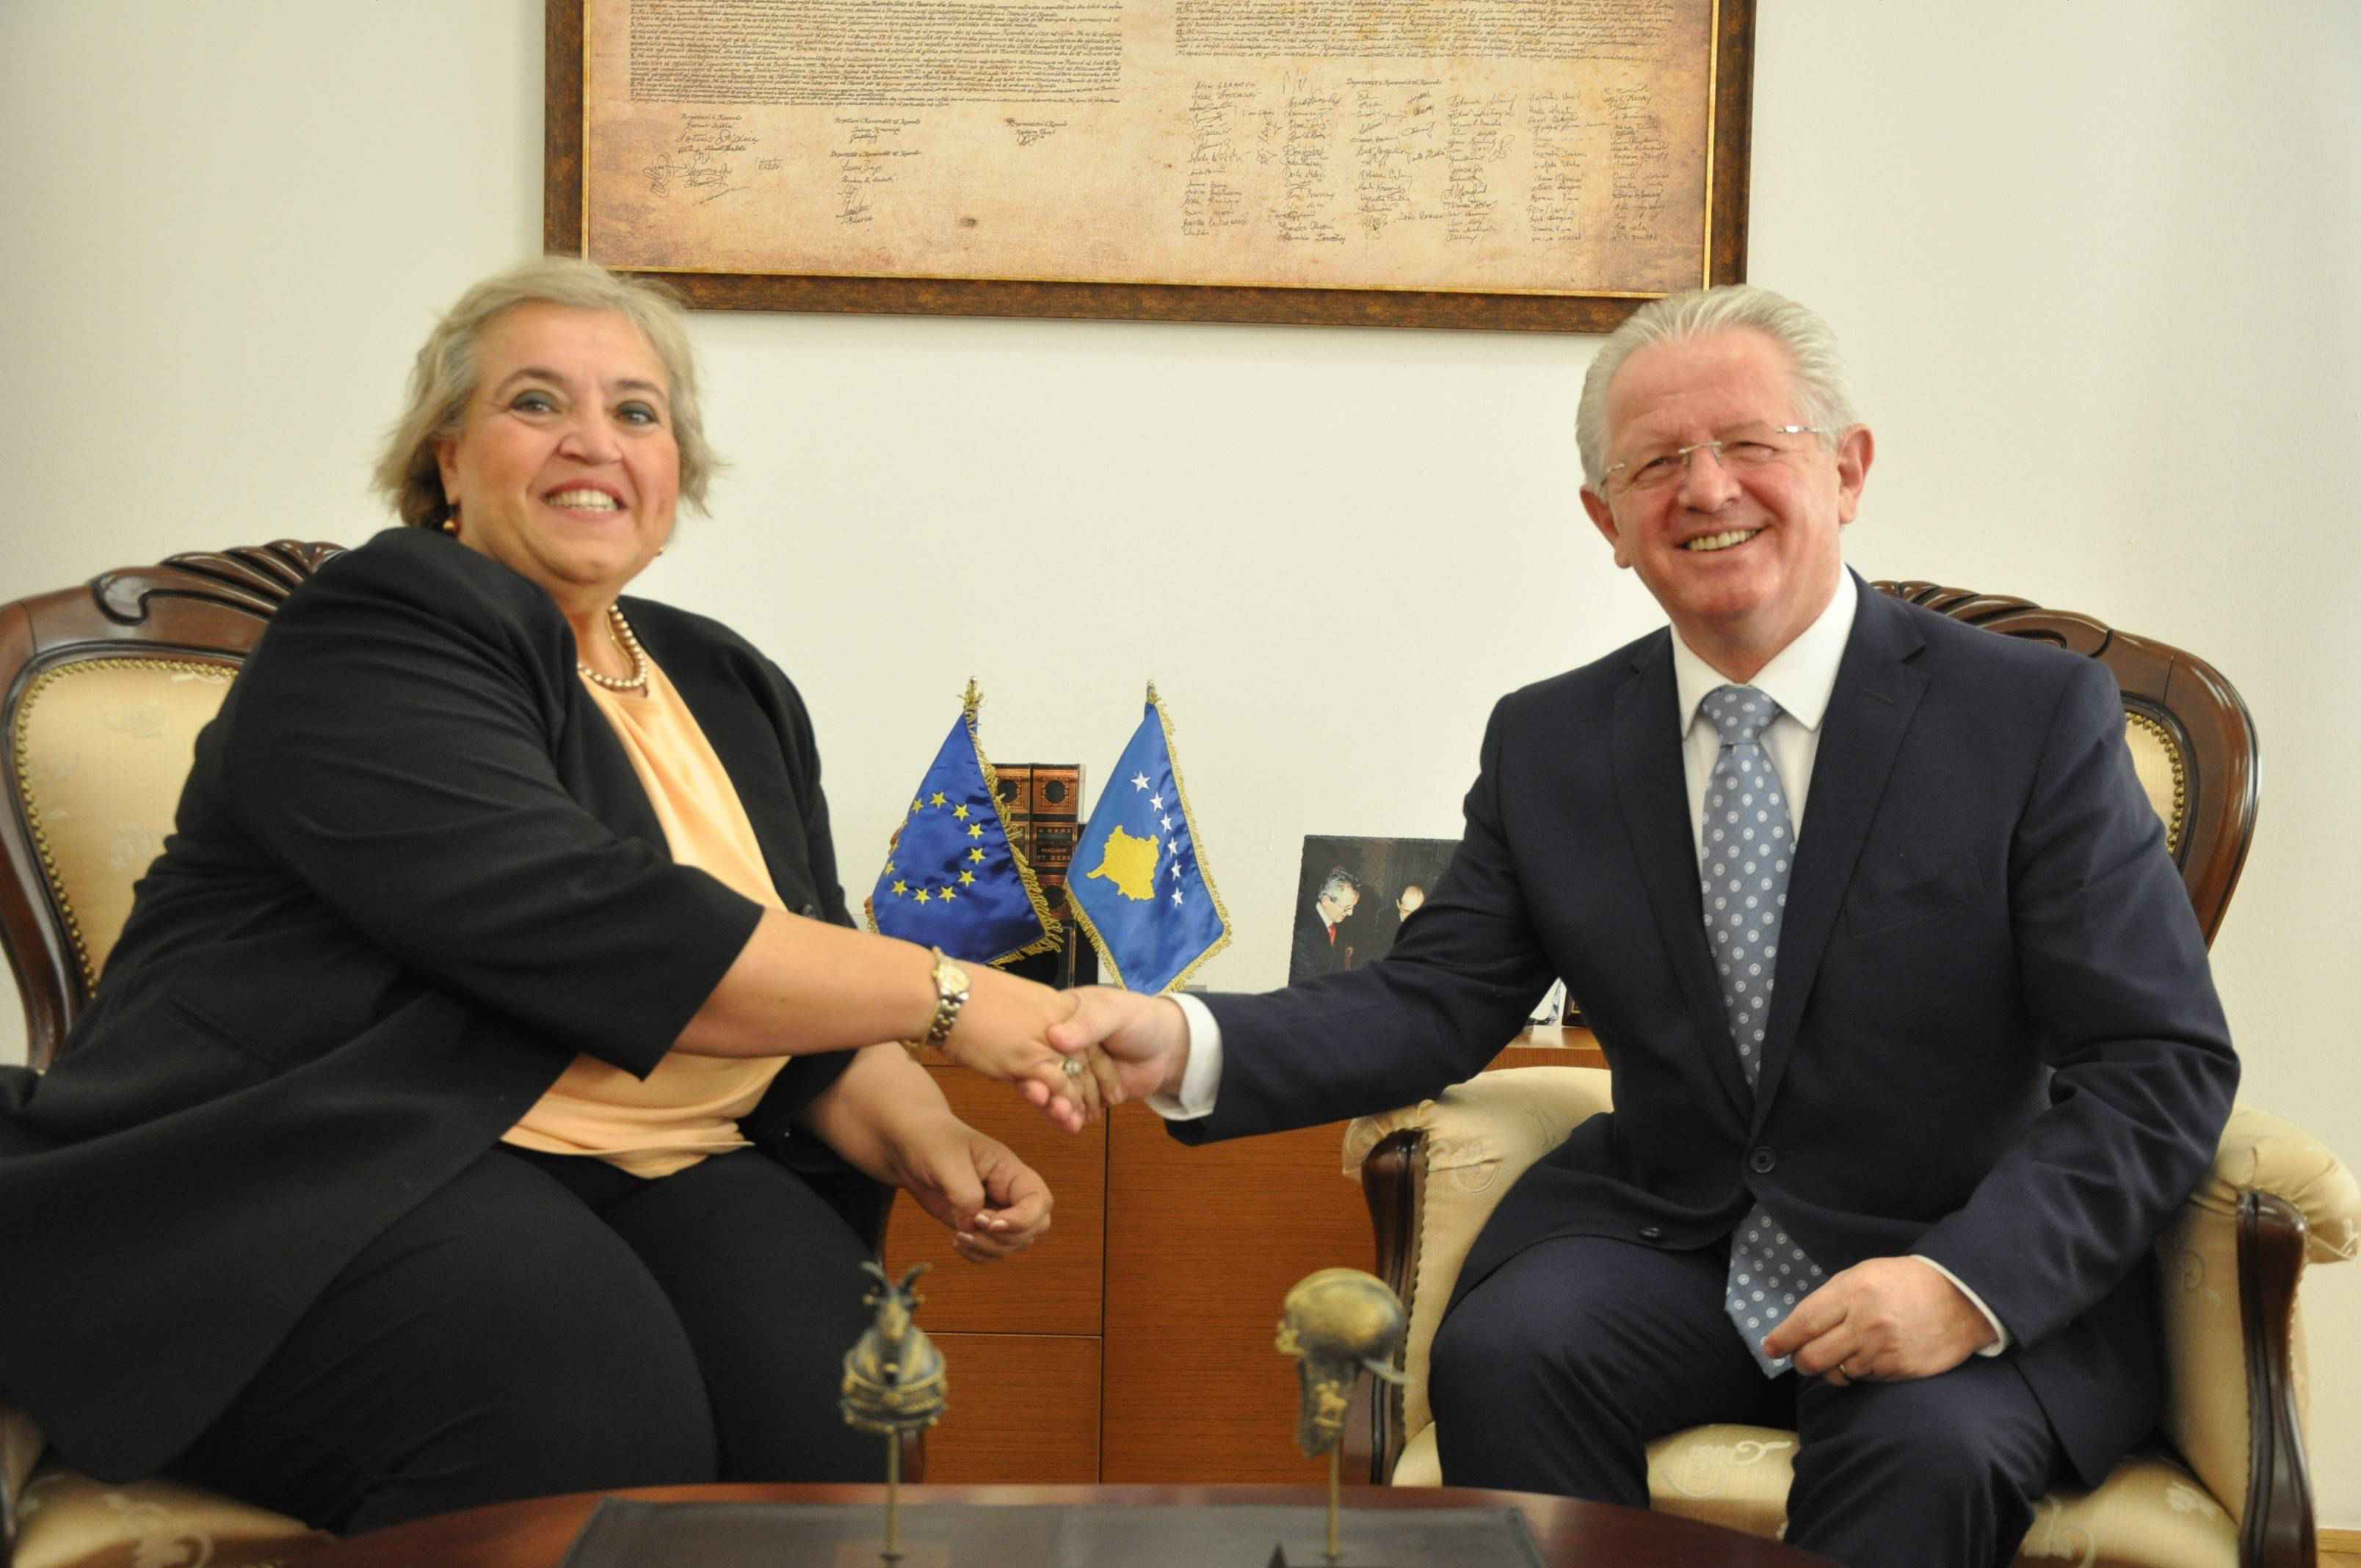 EULEX-i vazhdon bashkëpunimin me institucionet e vendit